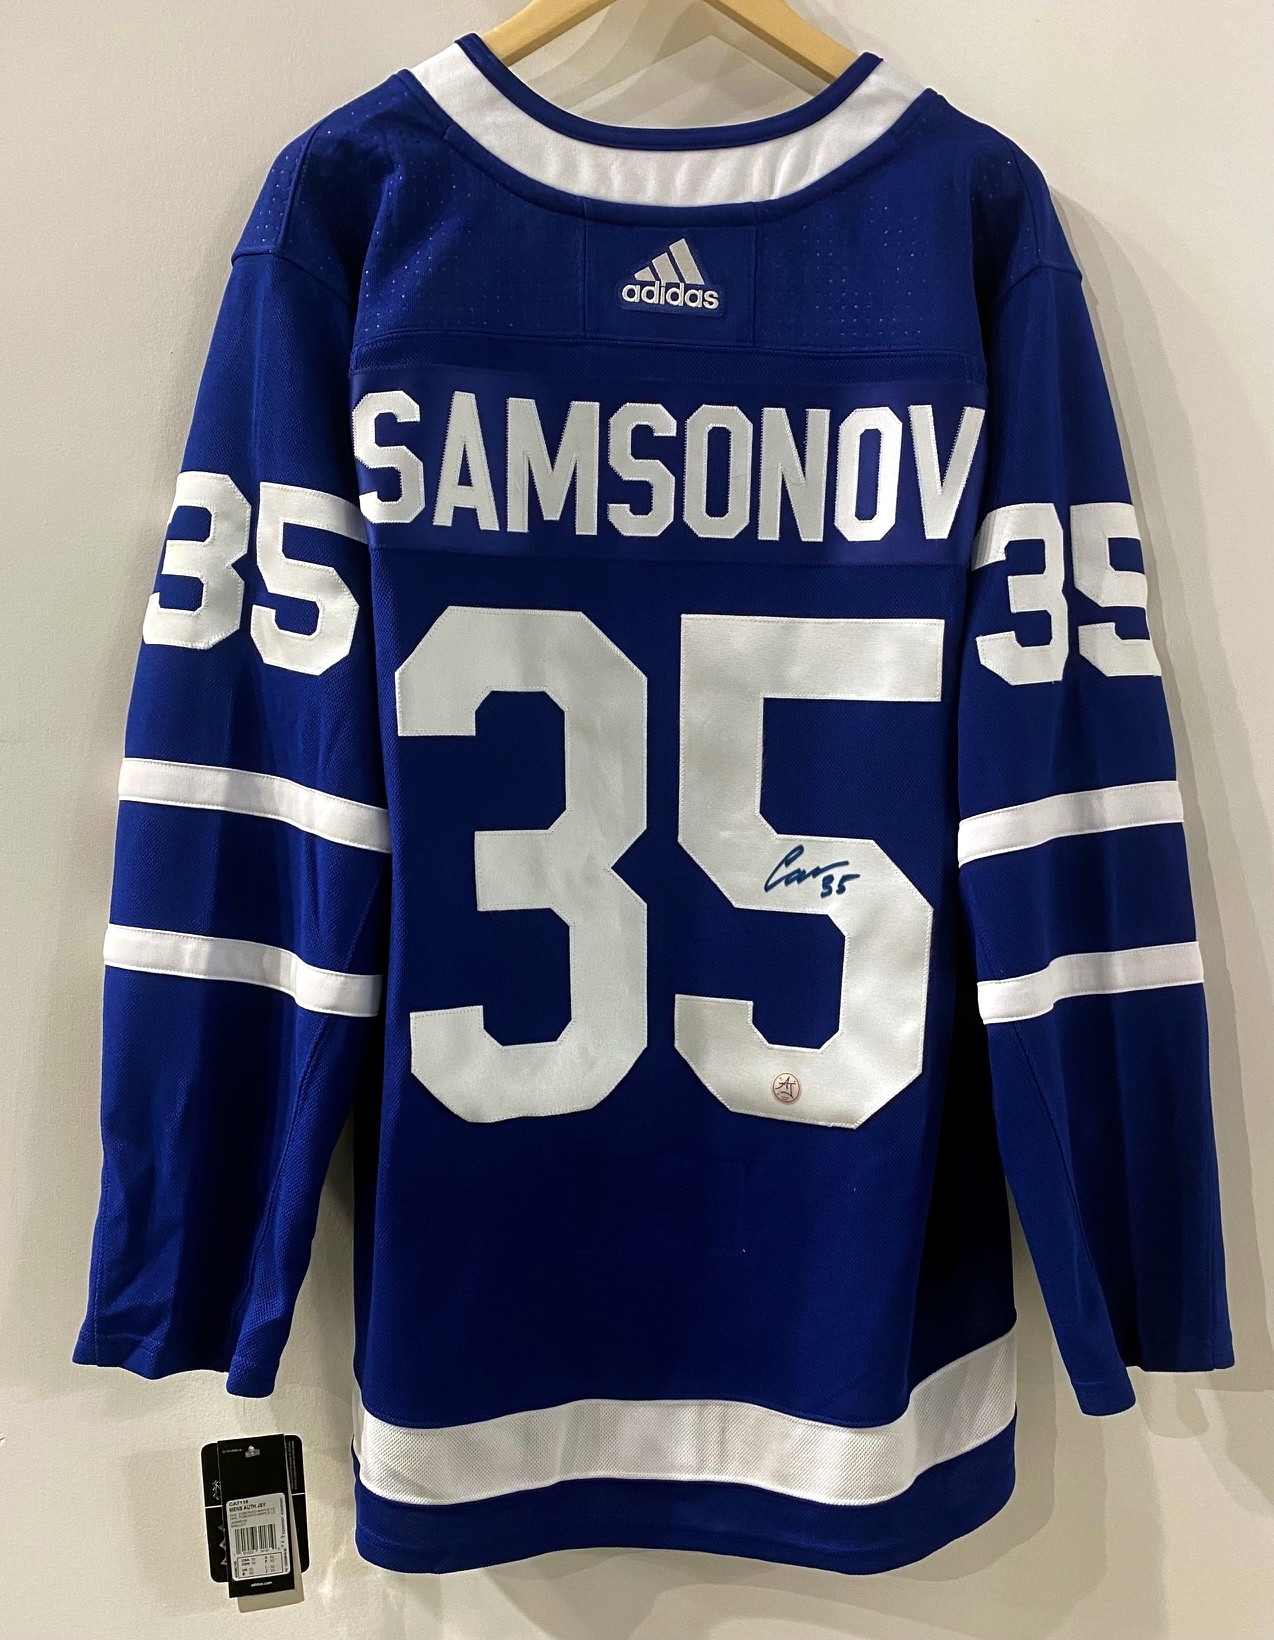 Ilya Samsonov Autographed Toronto Maple Leafs Adidas Jersey